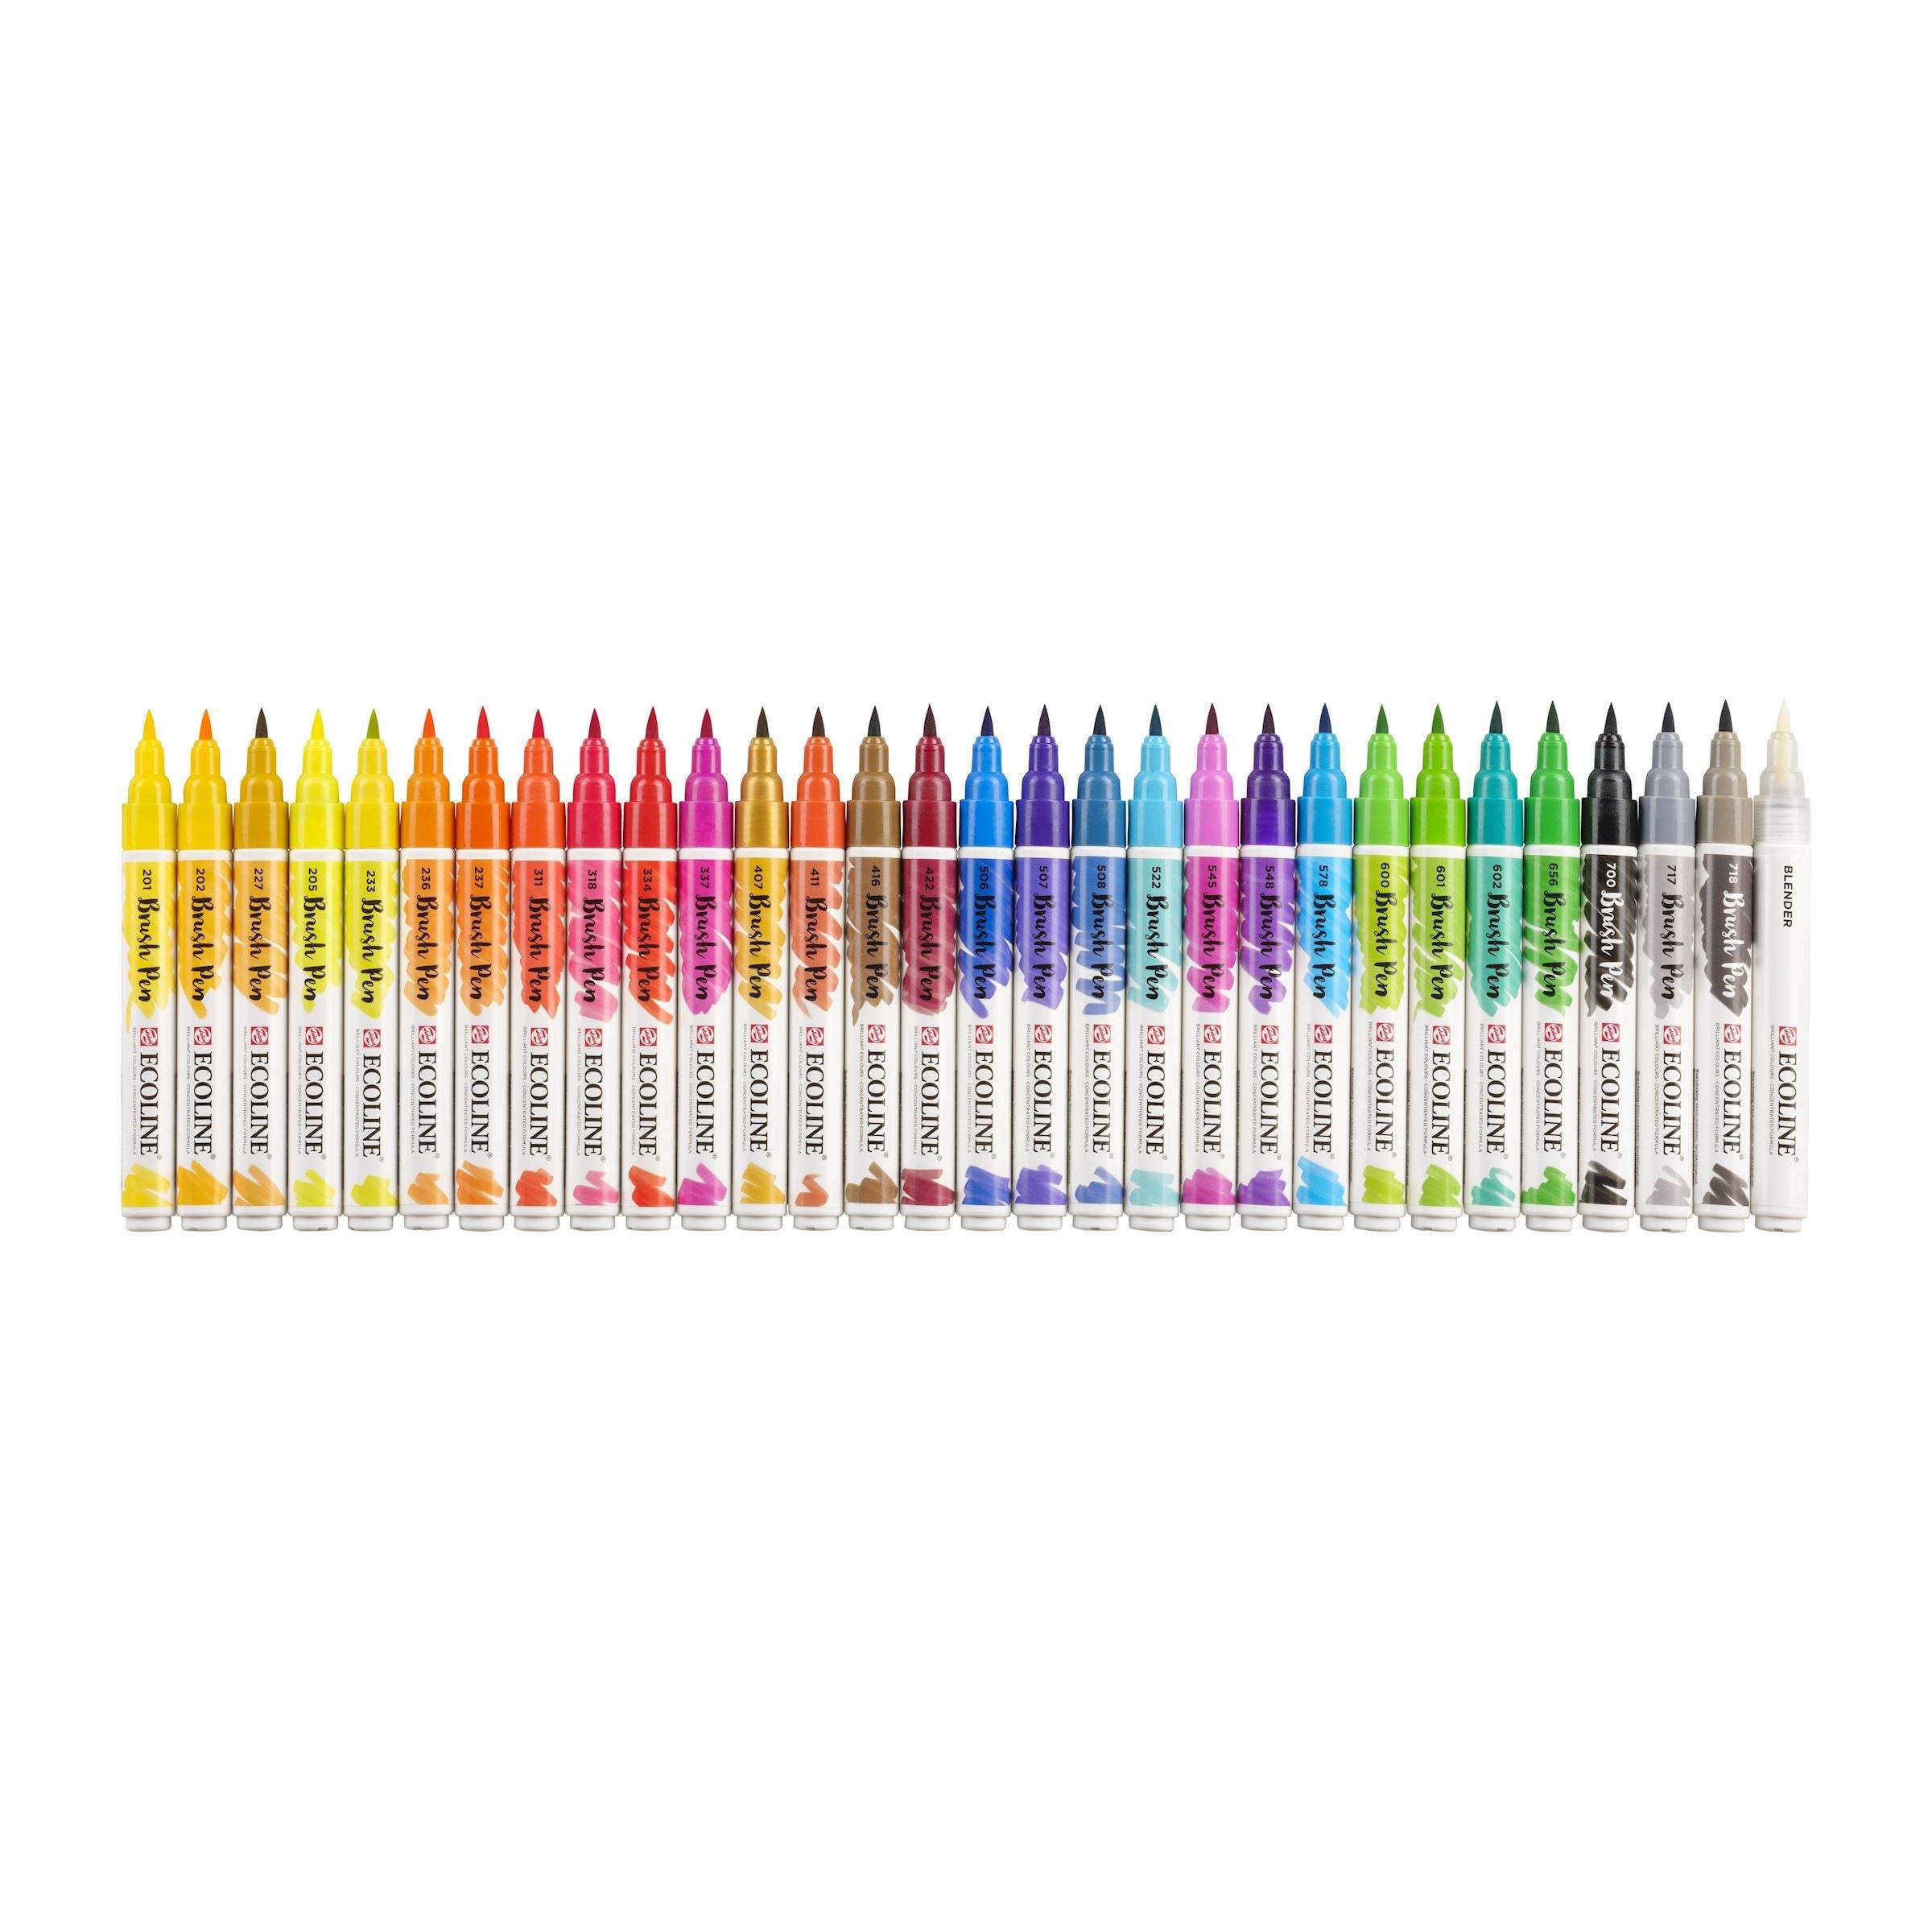 Ecocline Brush Pens set of 30 - 0